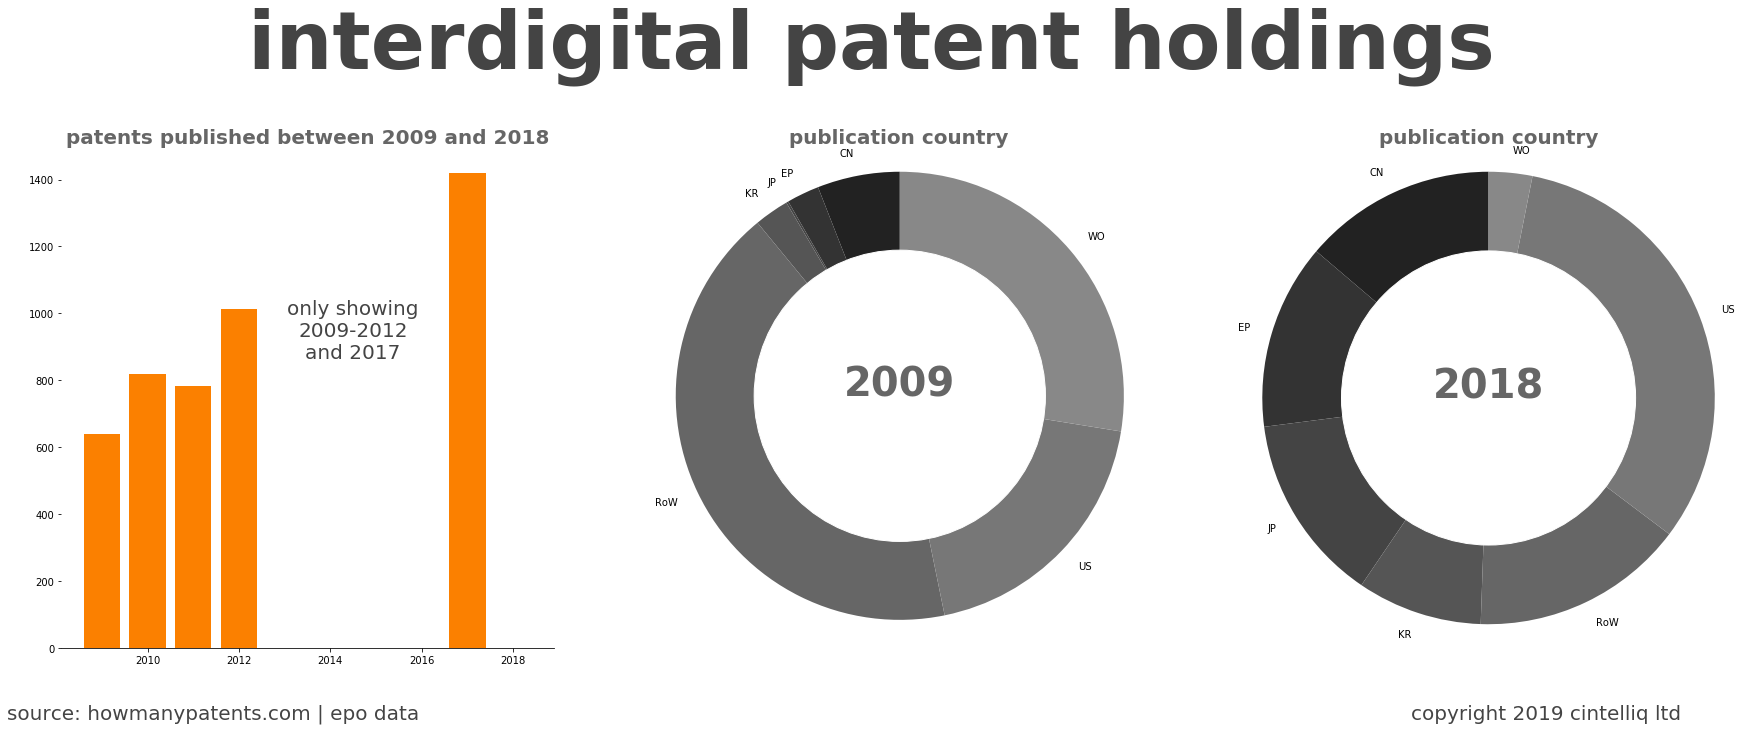 summary of patents for Interdigital Patent Holdings